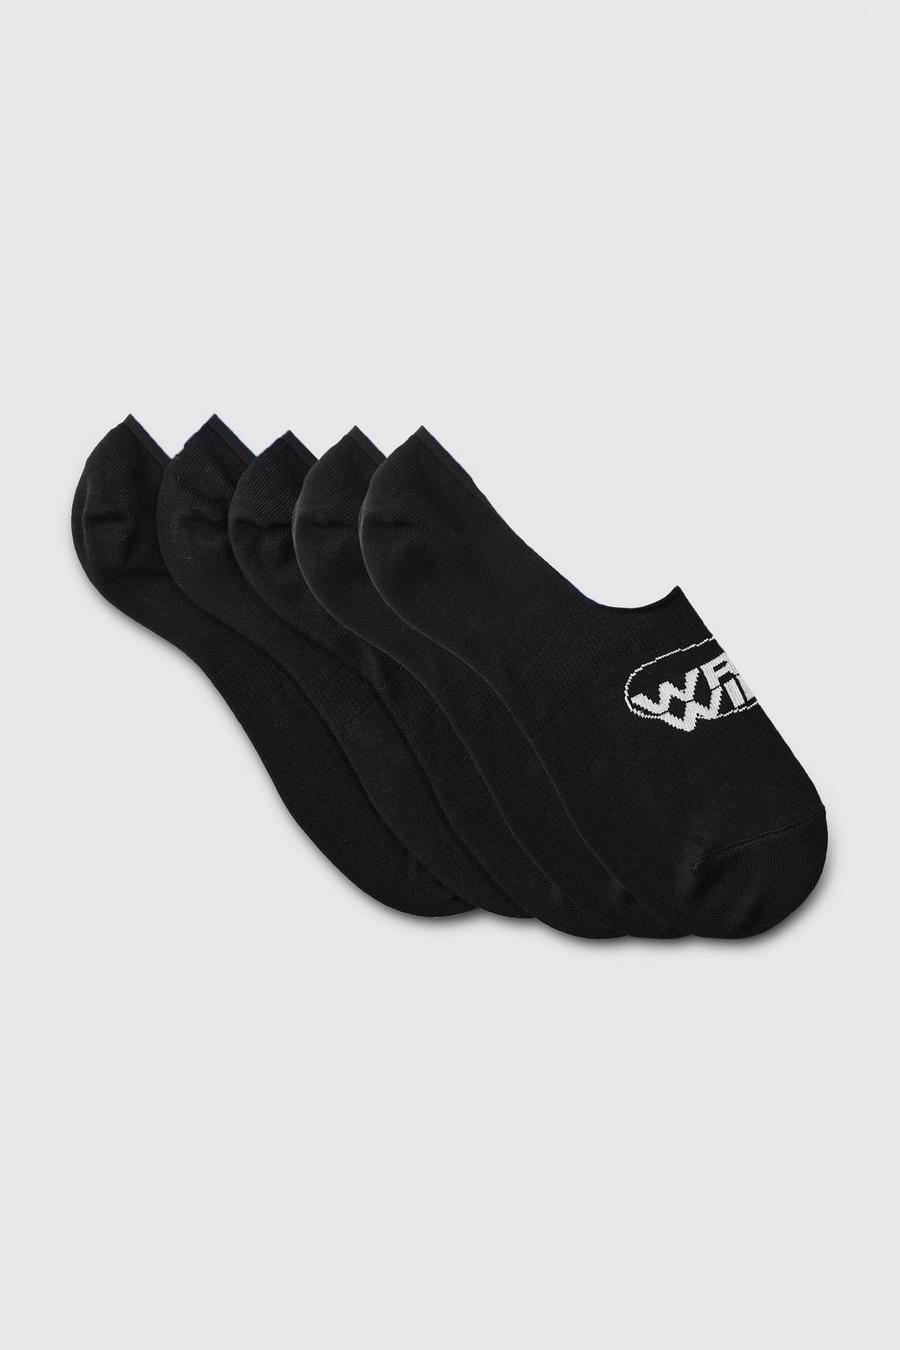 Pack de 3 pares de calcetines invisibles con logo Worldwide, Black